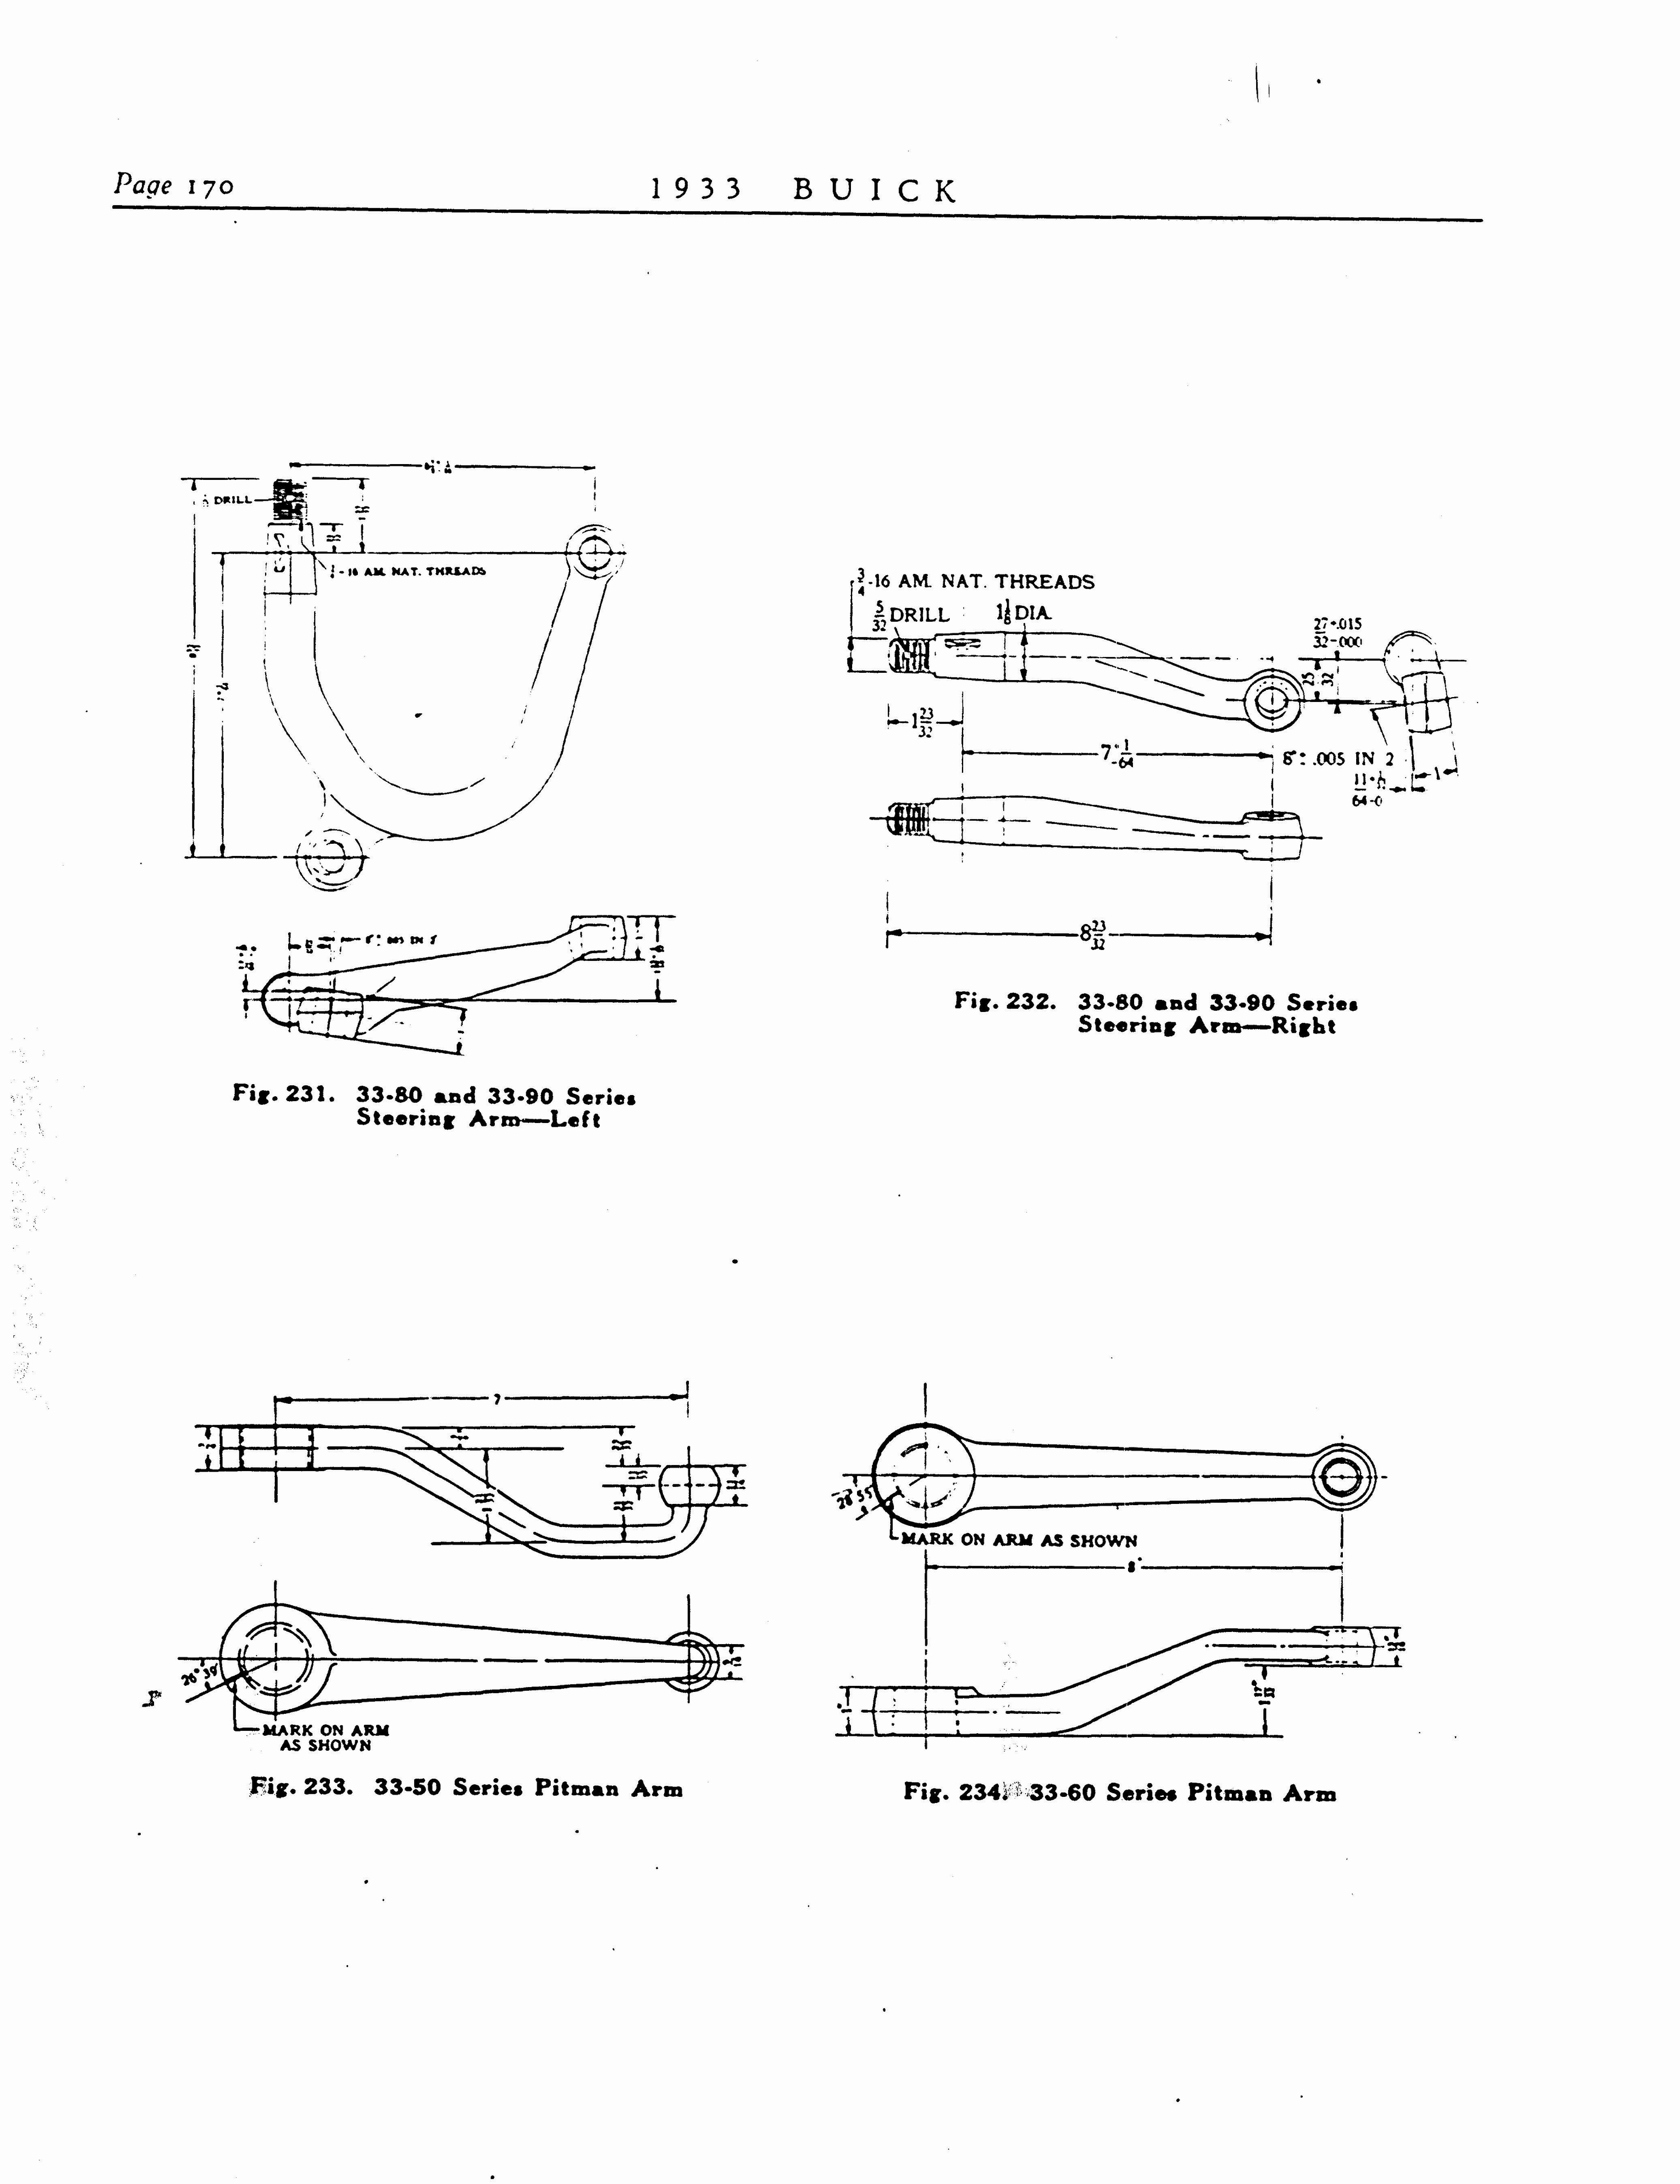 n_1933 Buick Shop Manual_Page_171.jpg